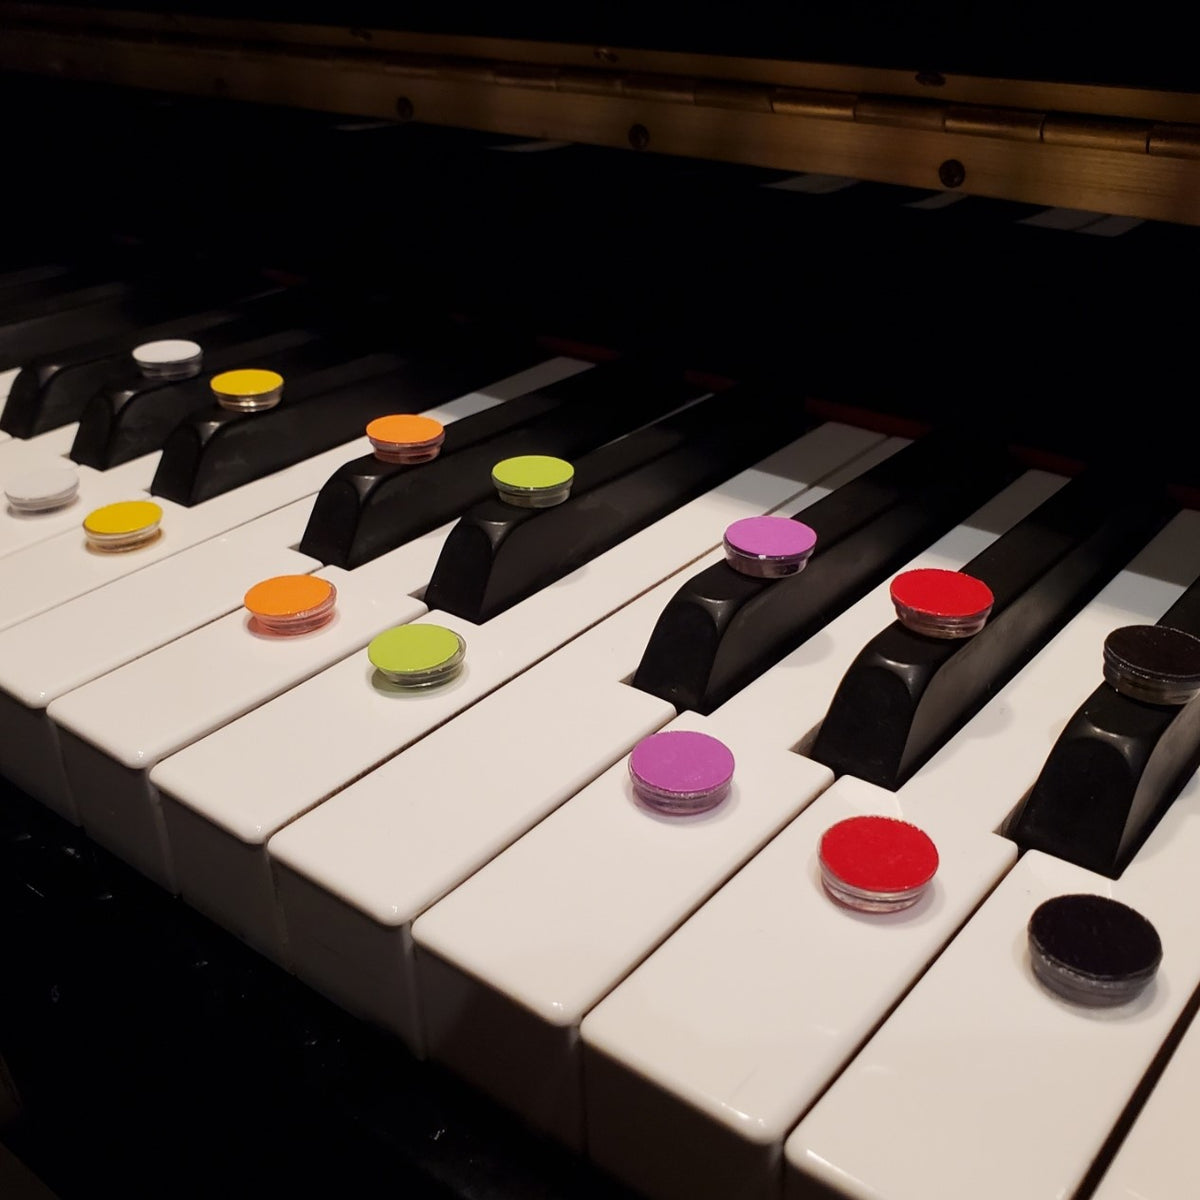 colorful piano keys wallpaper